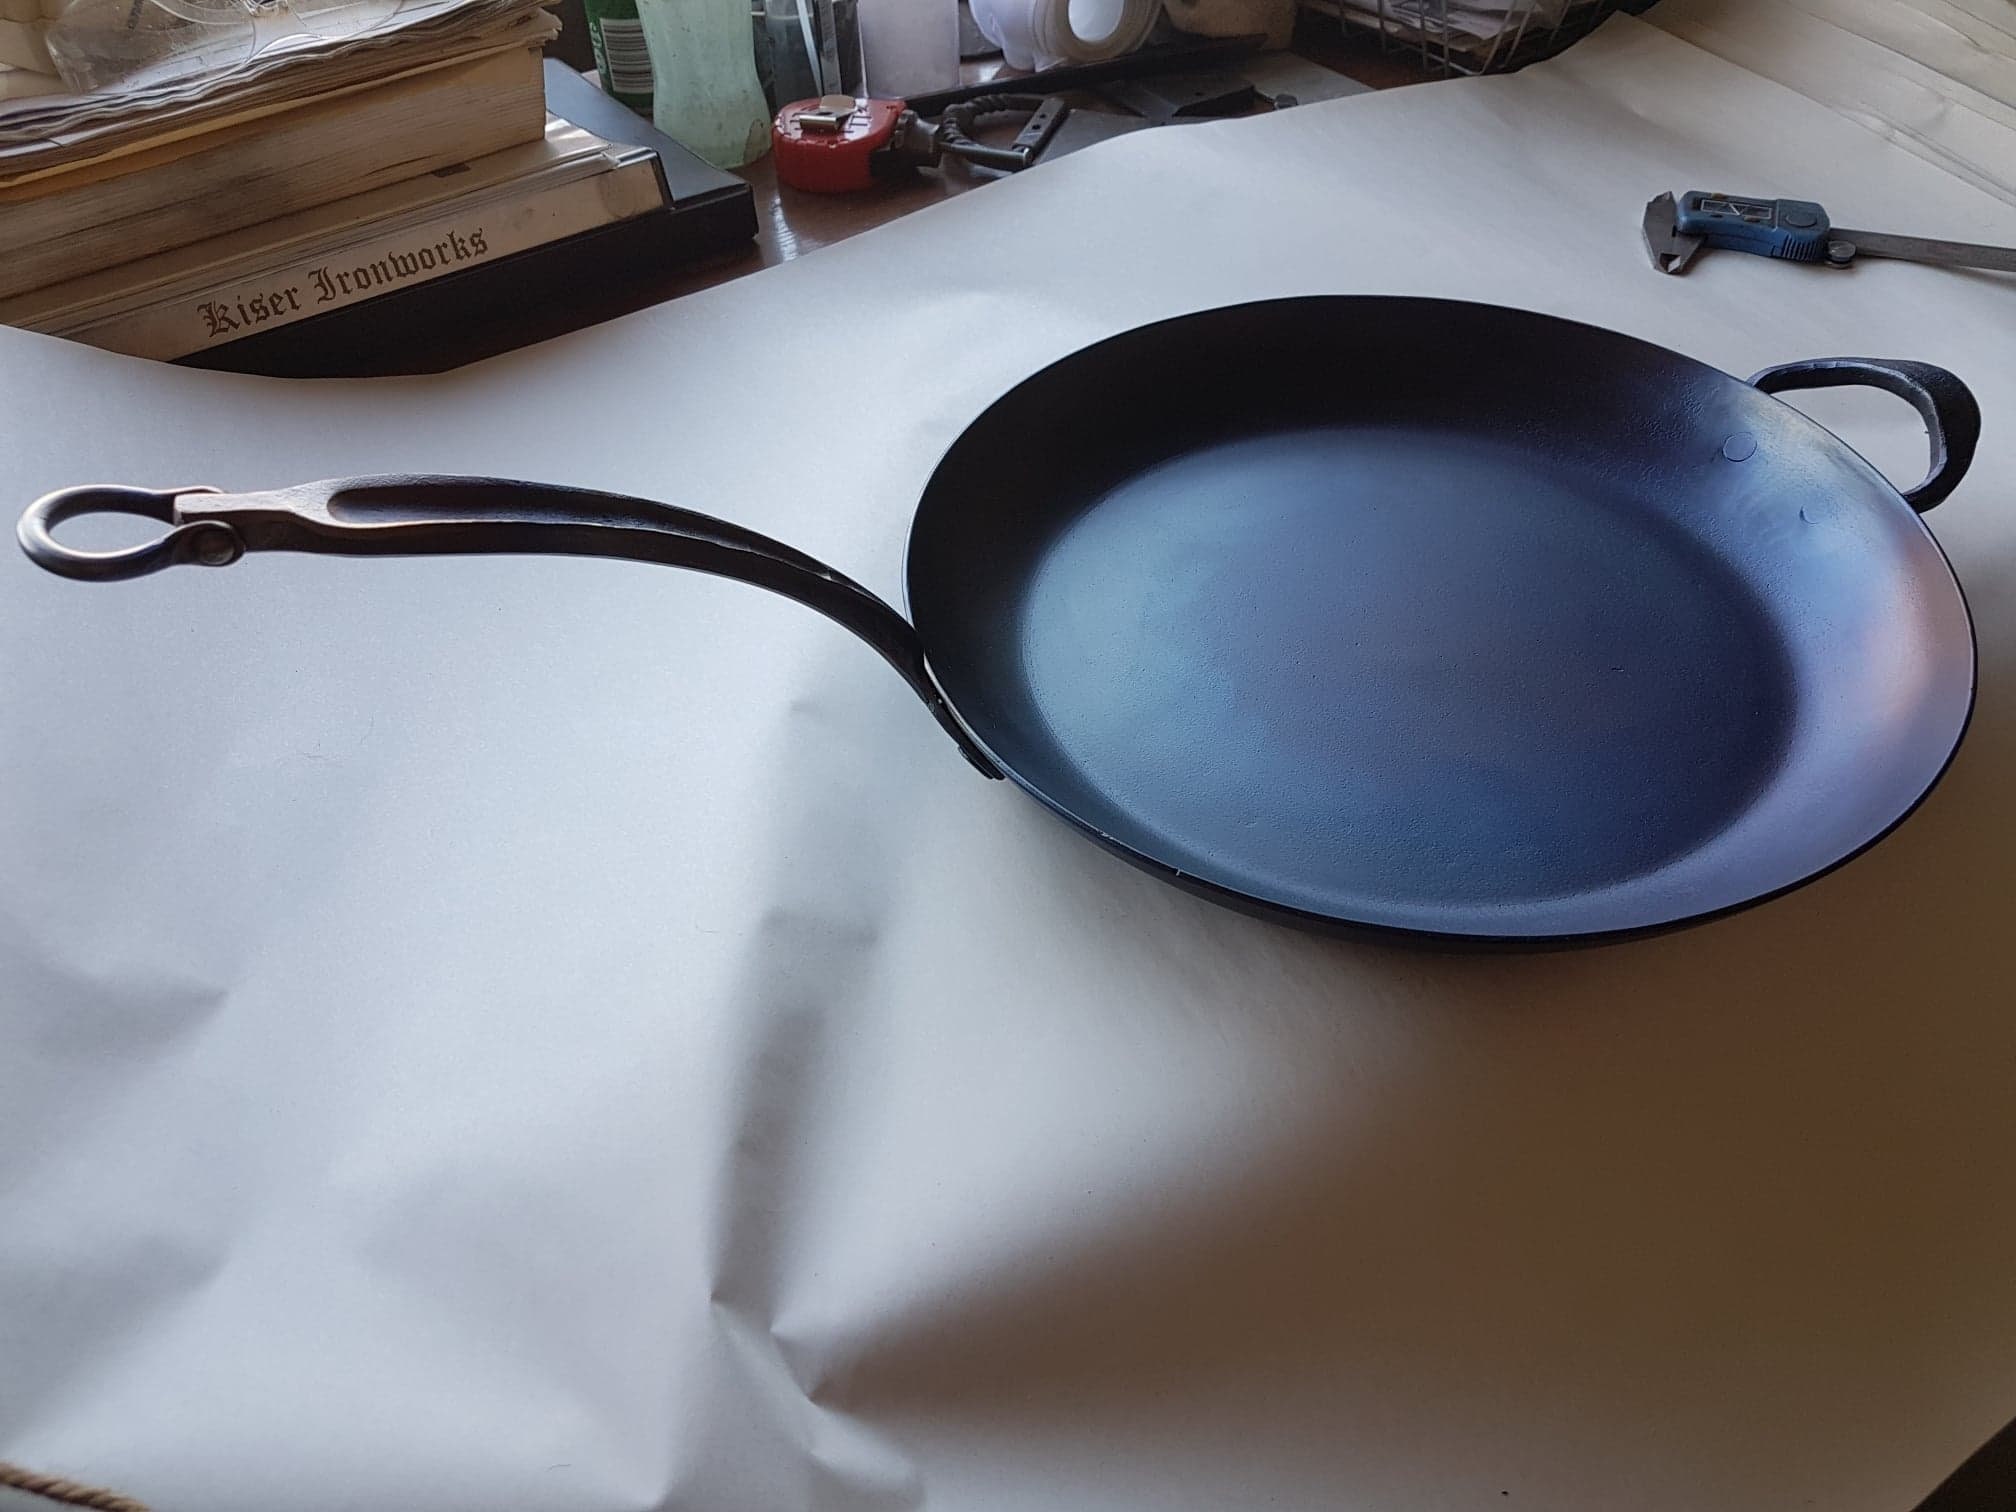 11 (28cm) Spun iron small wok with lid